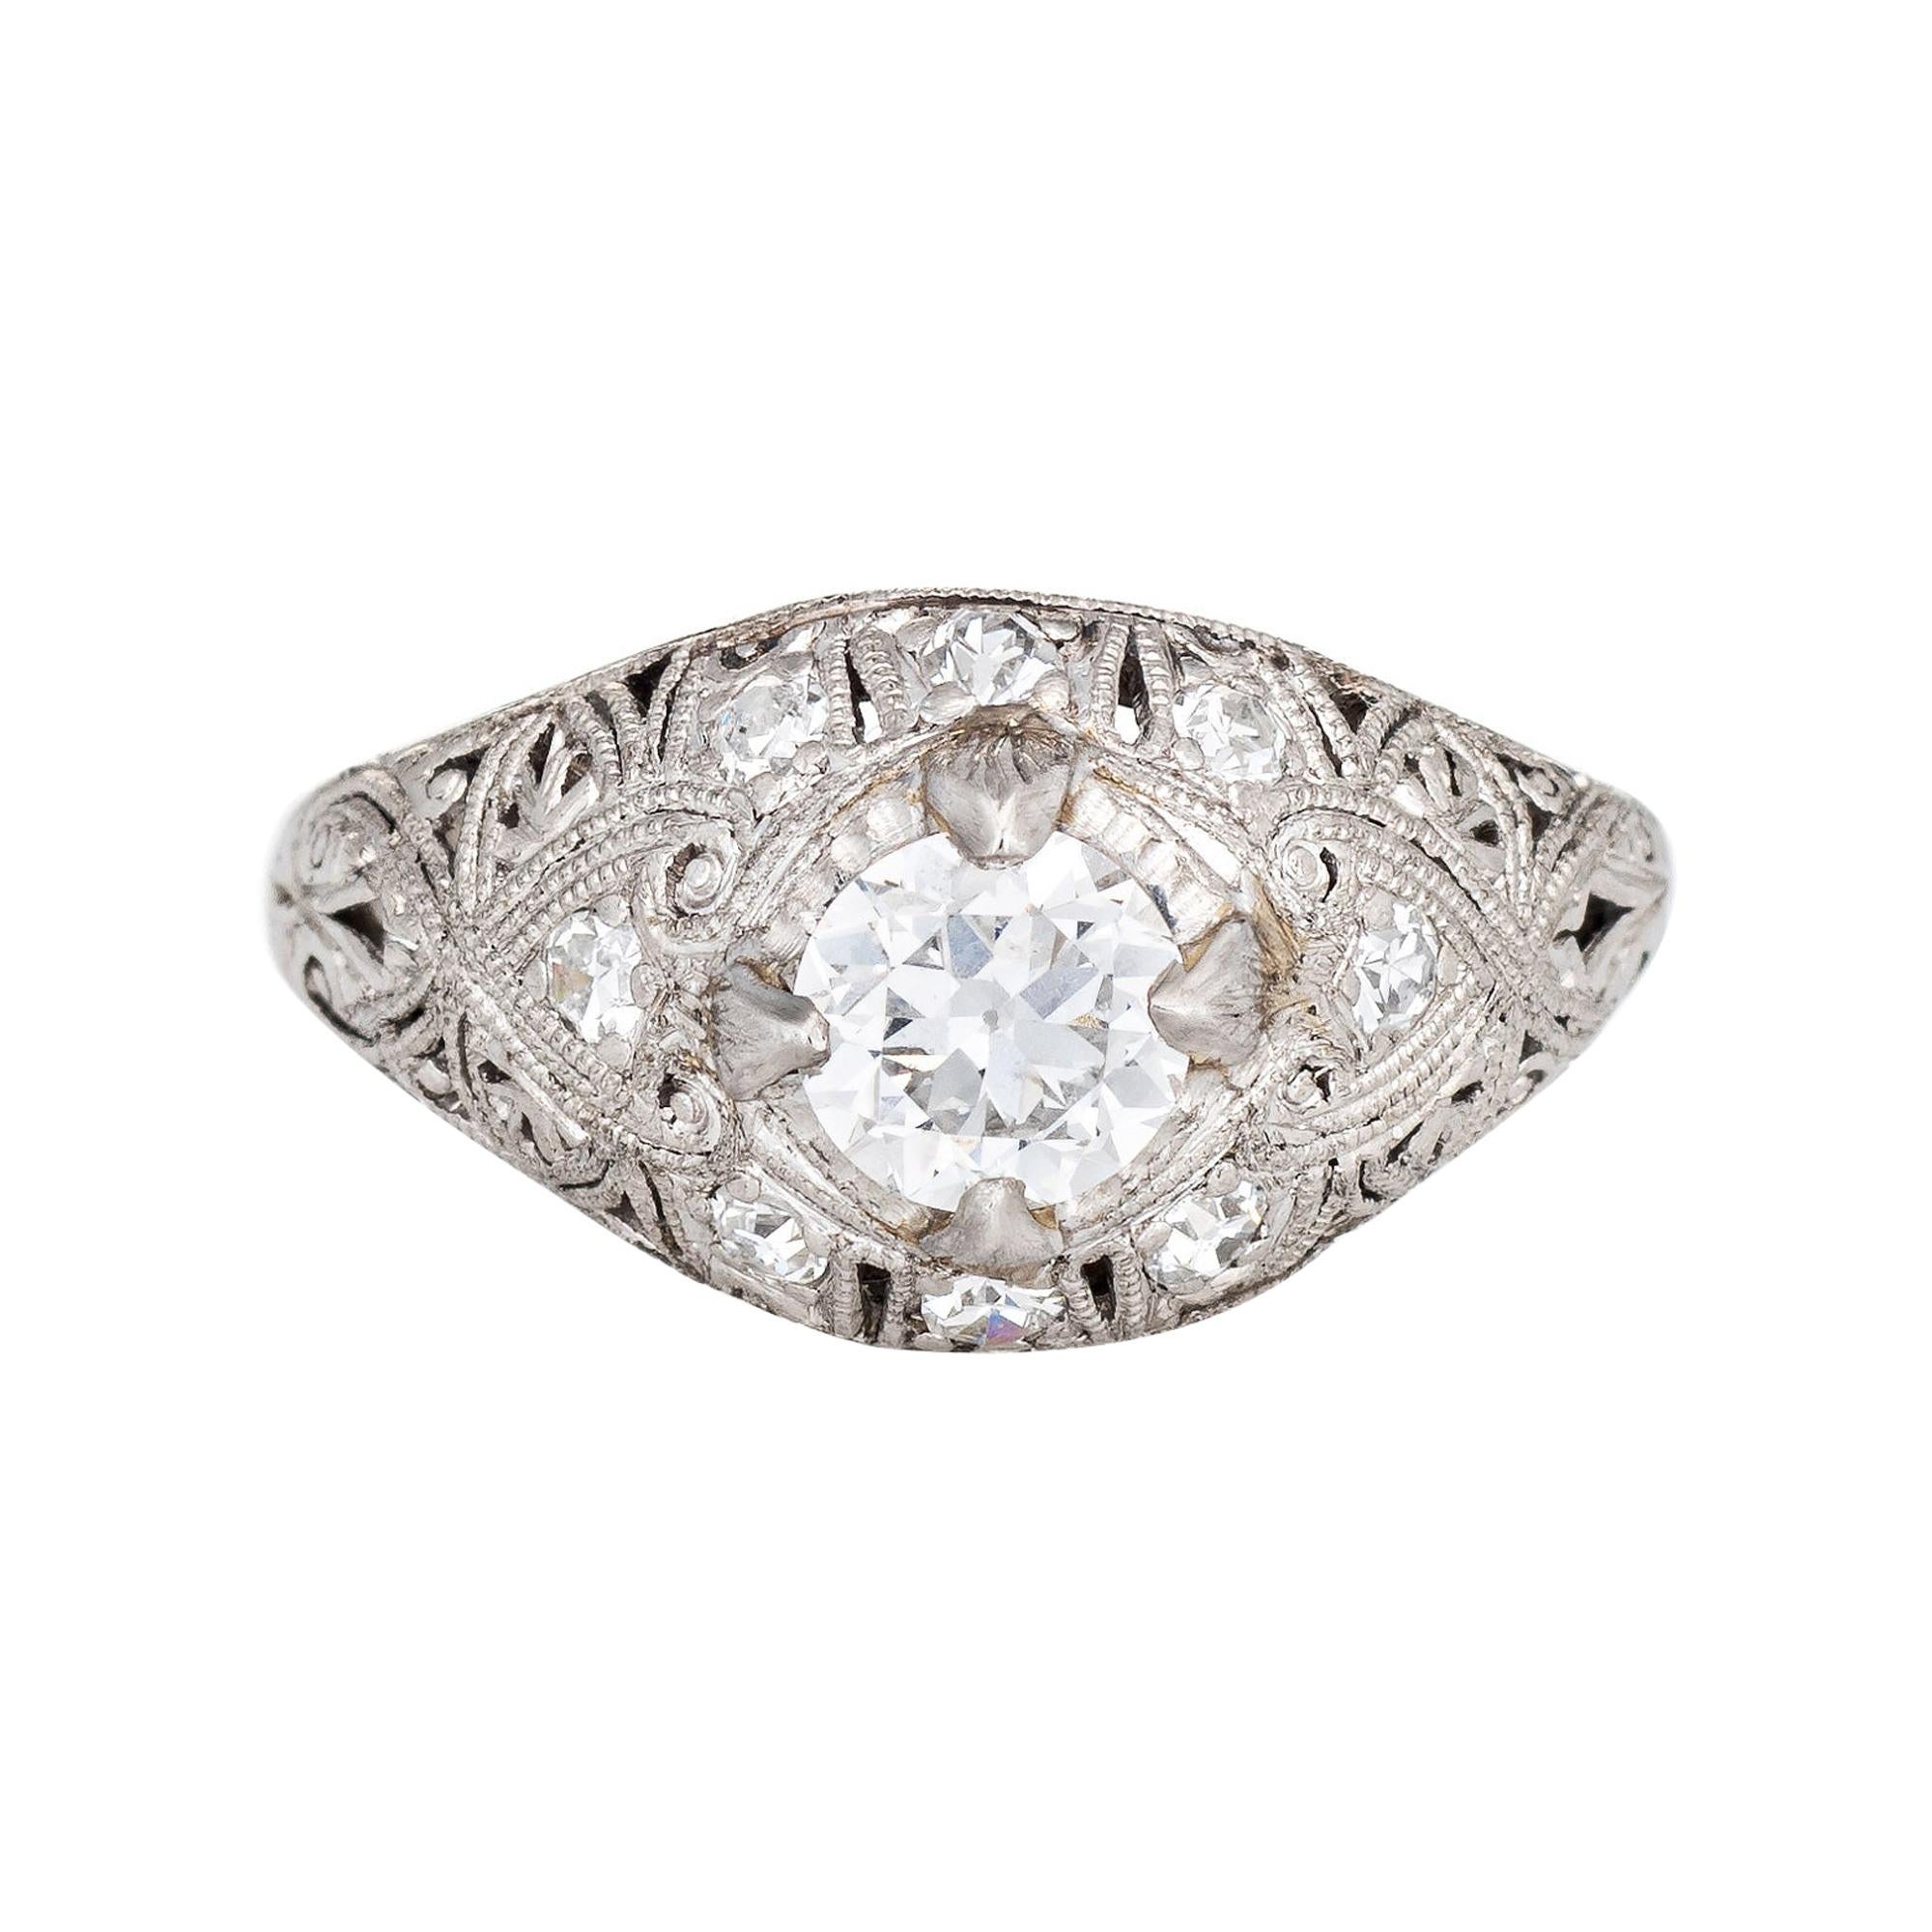 Antique Edwardian 0.55ct Diamond Engagement Ring Vintage Platinum Bridal Jewelry For Sale